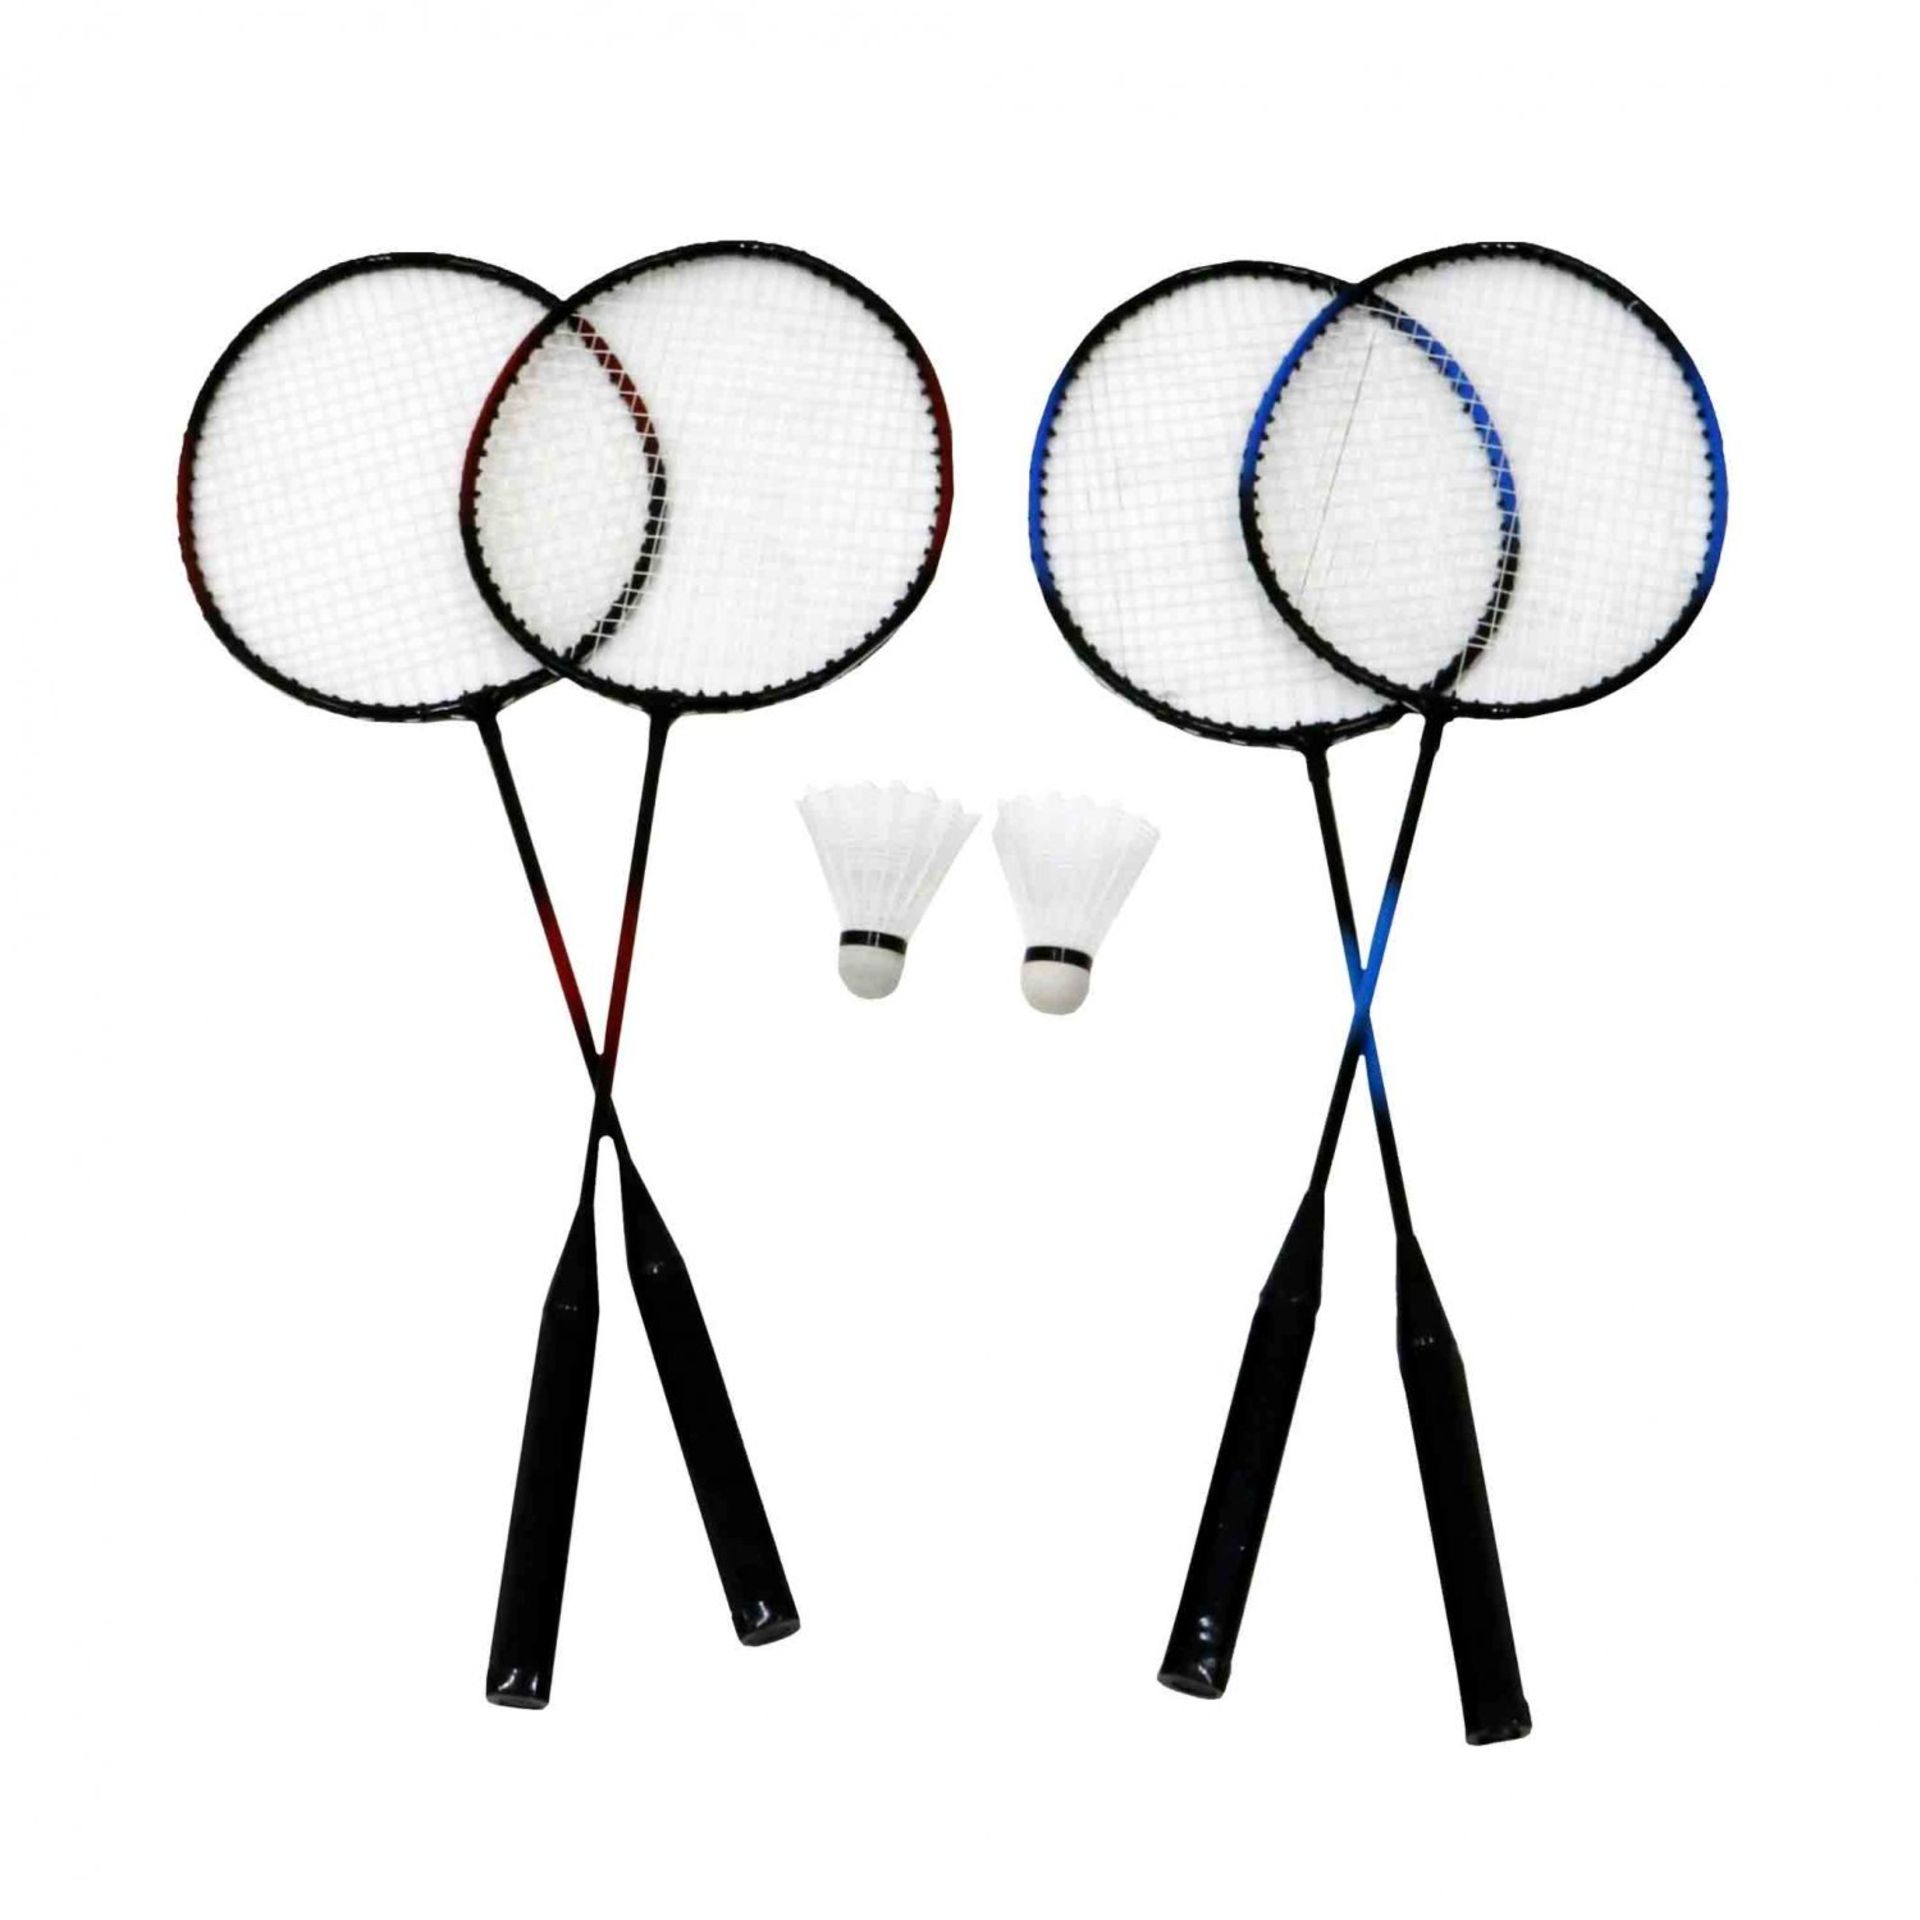 (RU28) 4 Player Badminton Set w/ Racket, Net, Shuttlecocks & Carry Bag The badminton set i... - Image 2 of 2